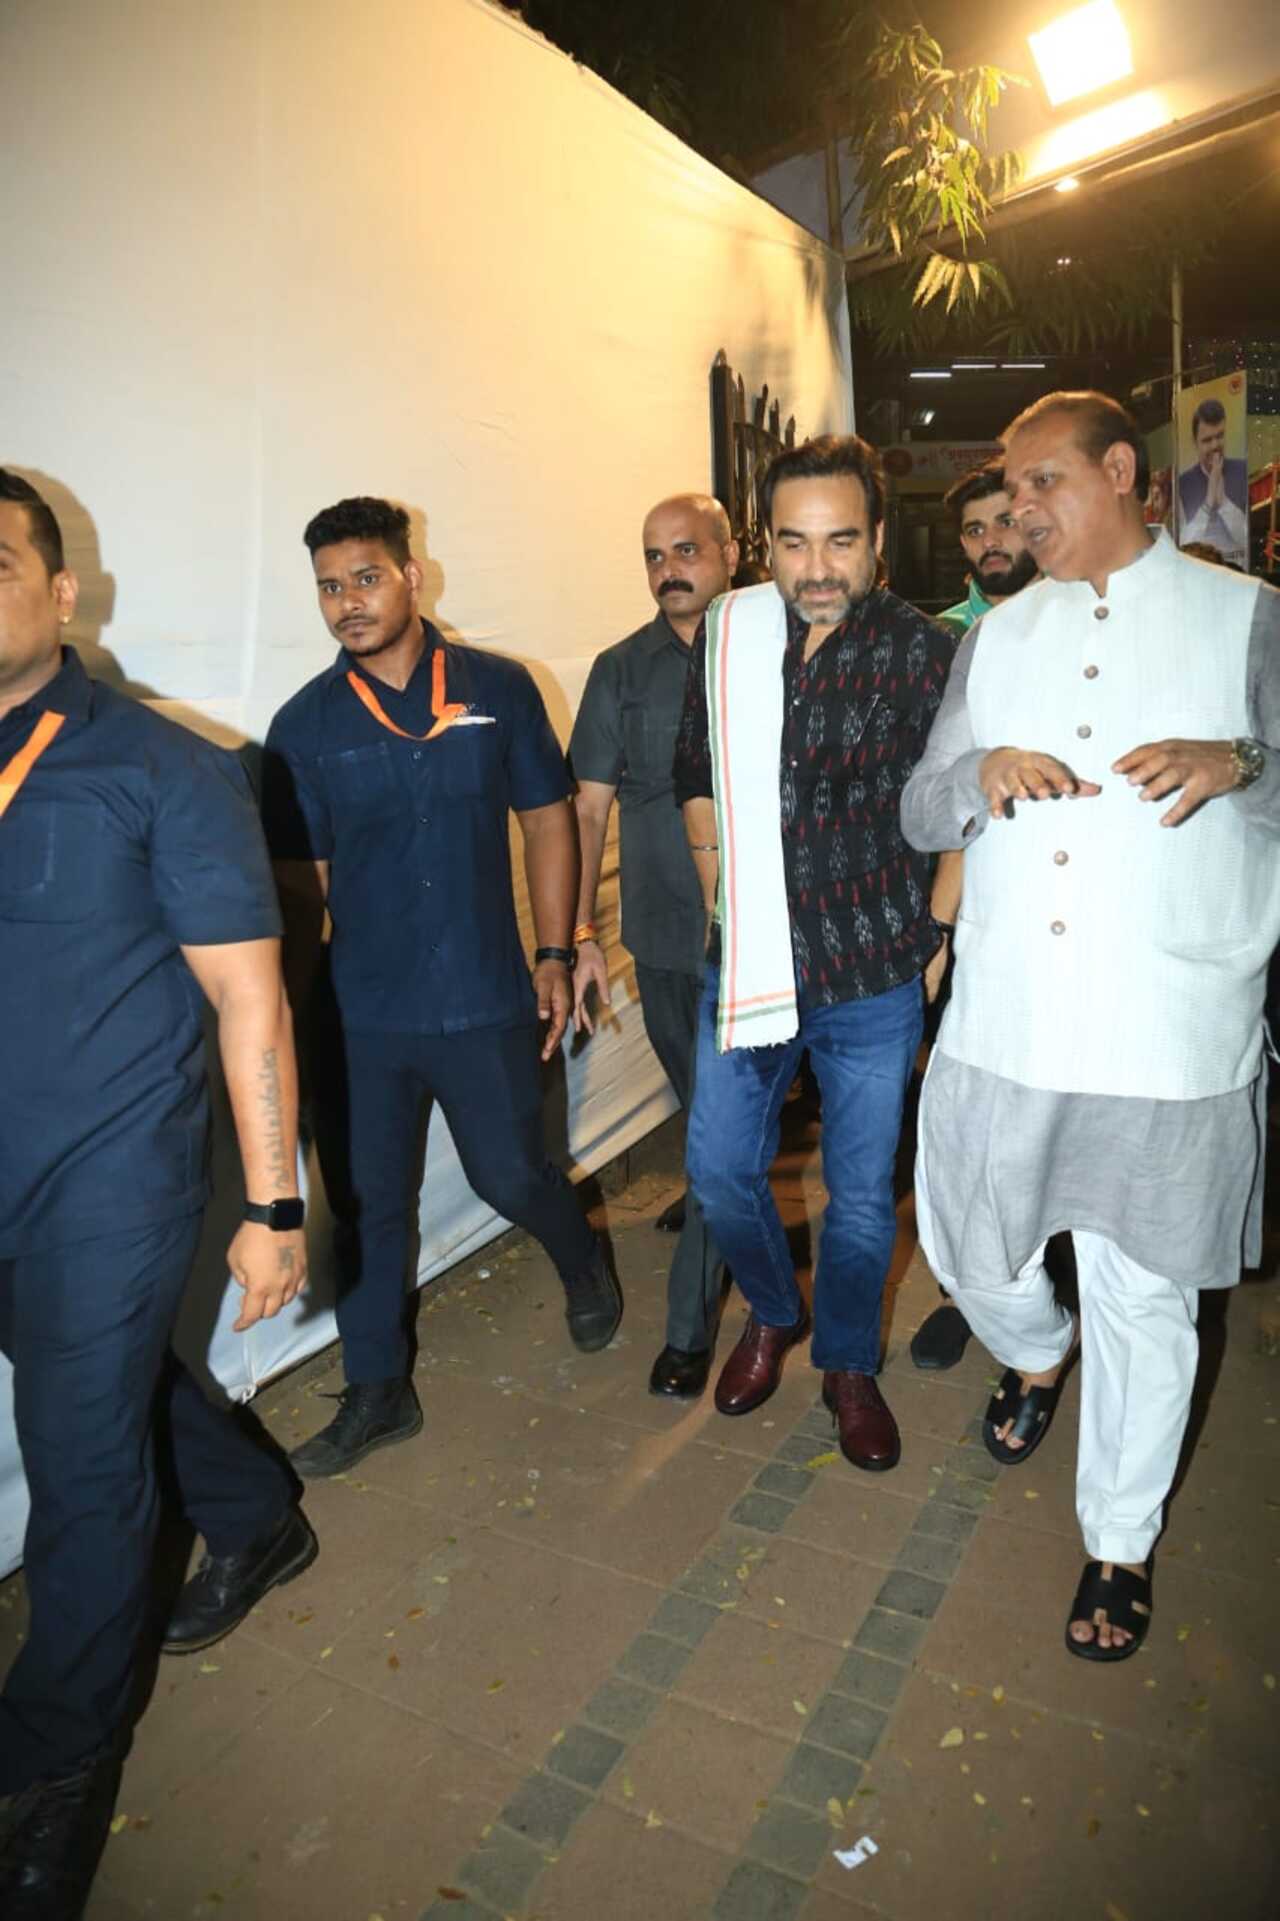 National award-winning actor Pankaj Tripathi opted for a simple look as he attended the dandiya utsav